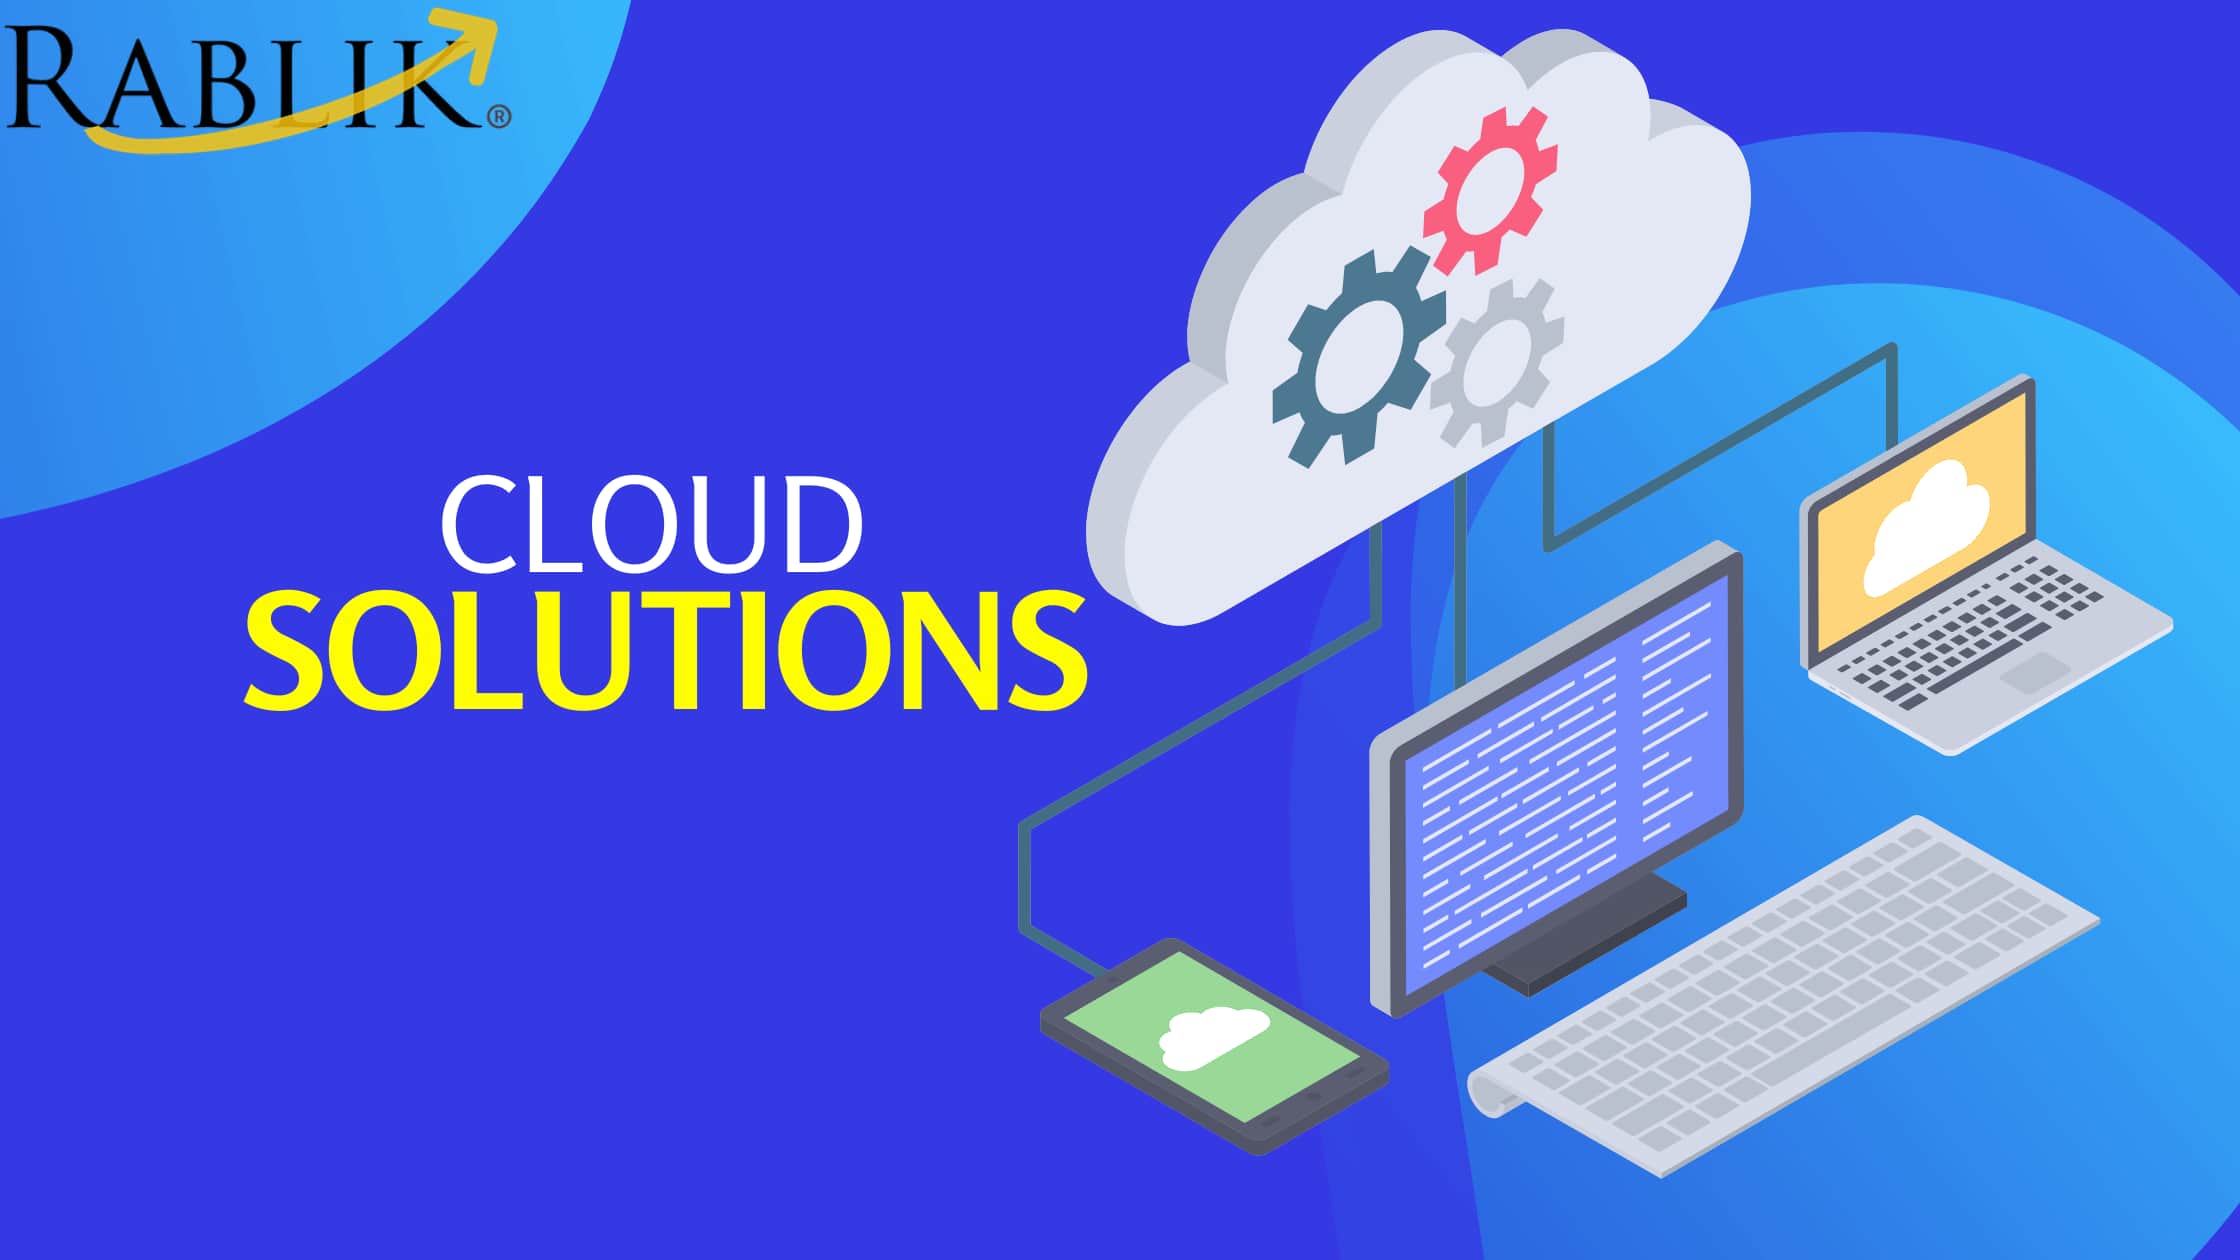 Cloud solutions